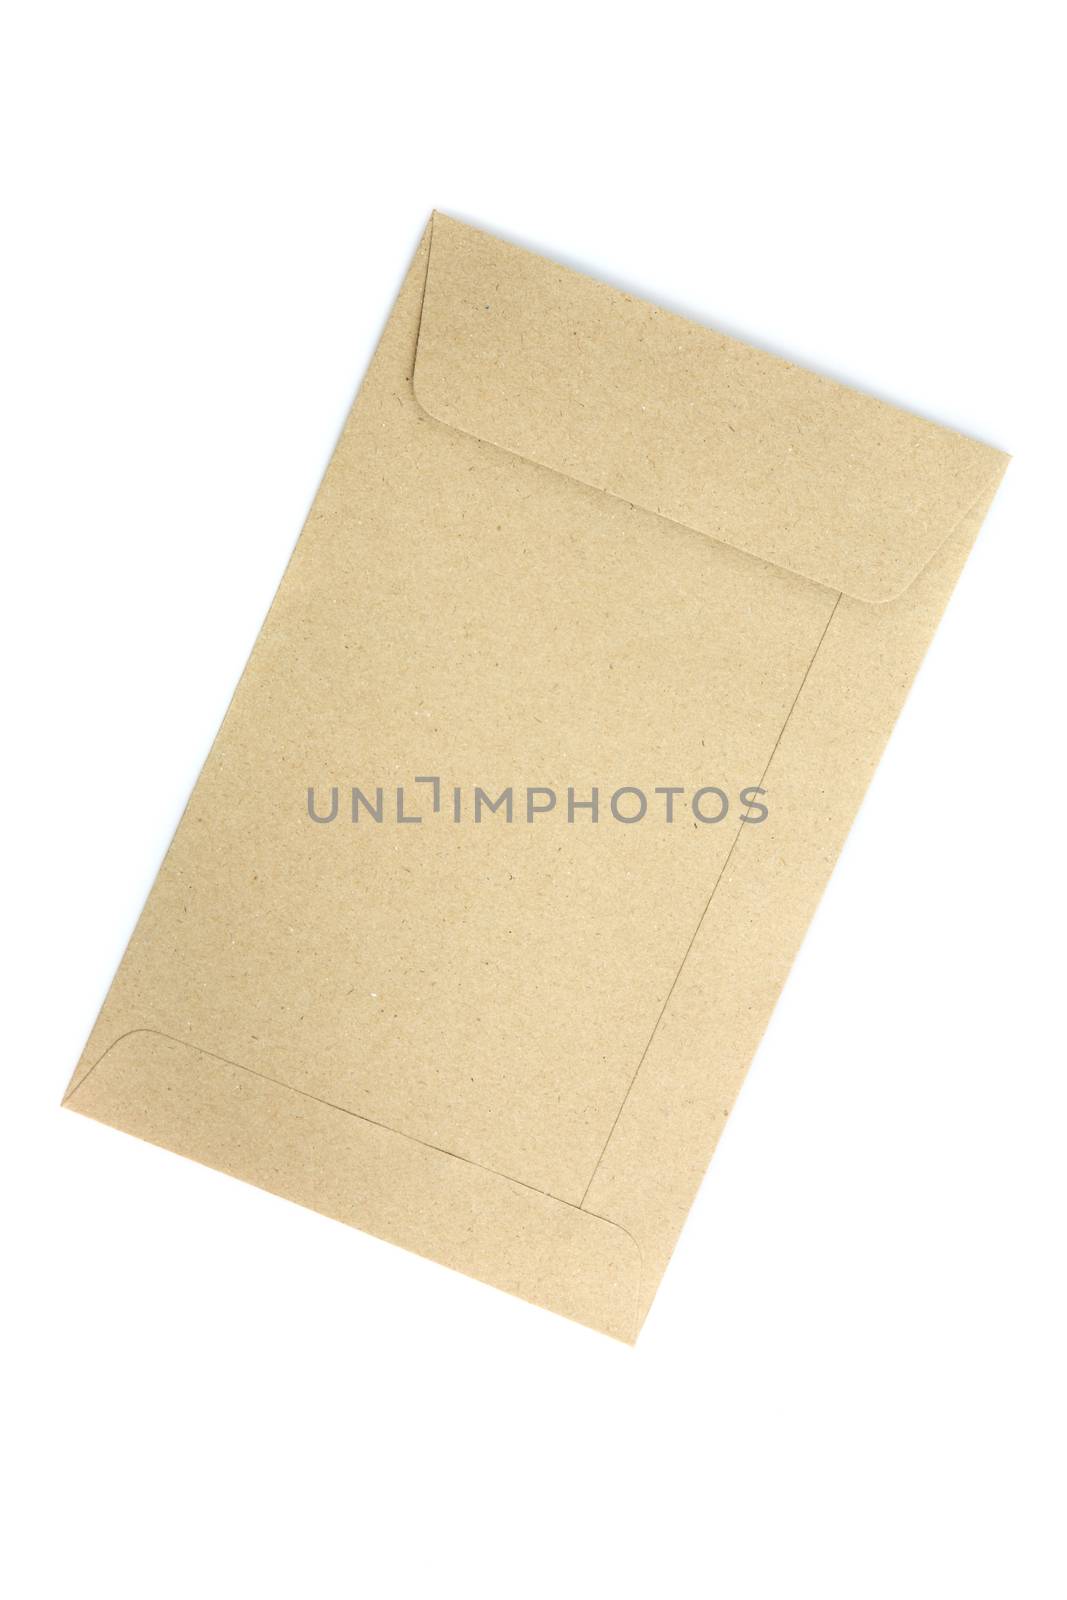 envelope isolated in white background by piyato